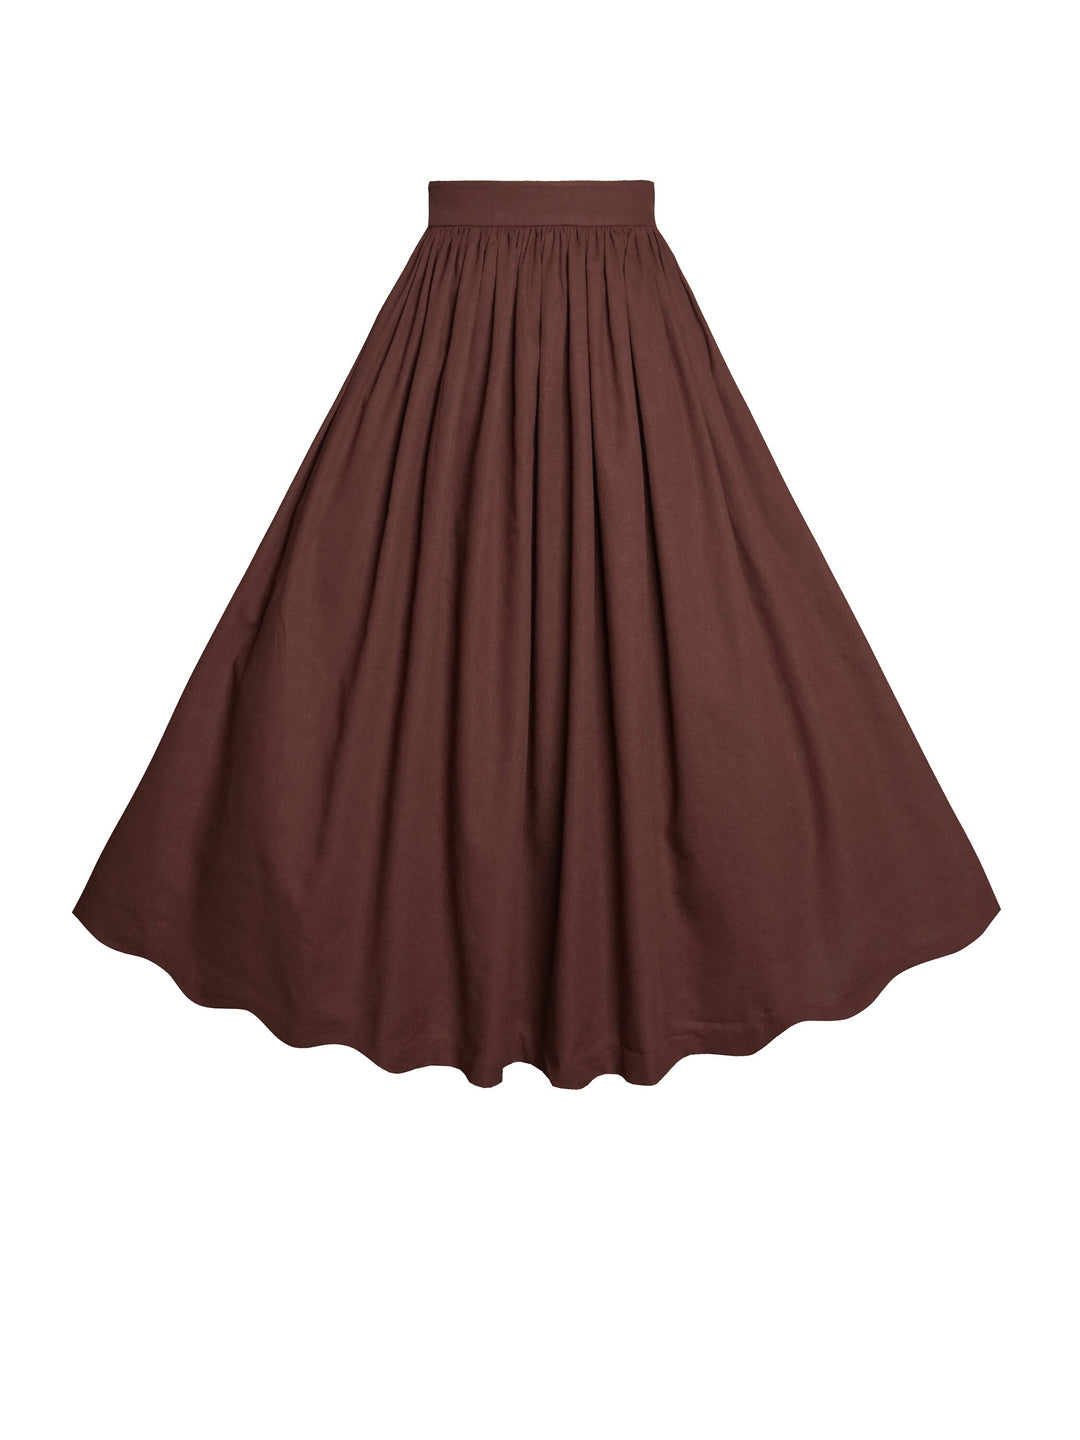 RTS - Size S - Lola Skirt in Walnut Linen